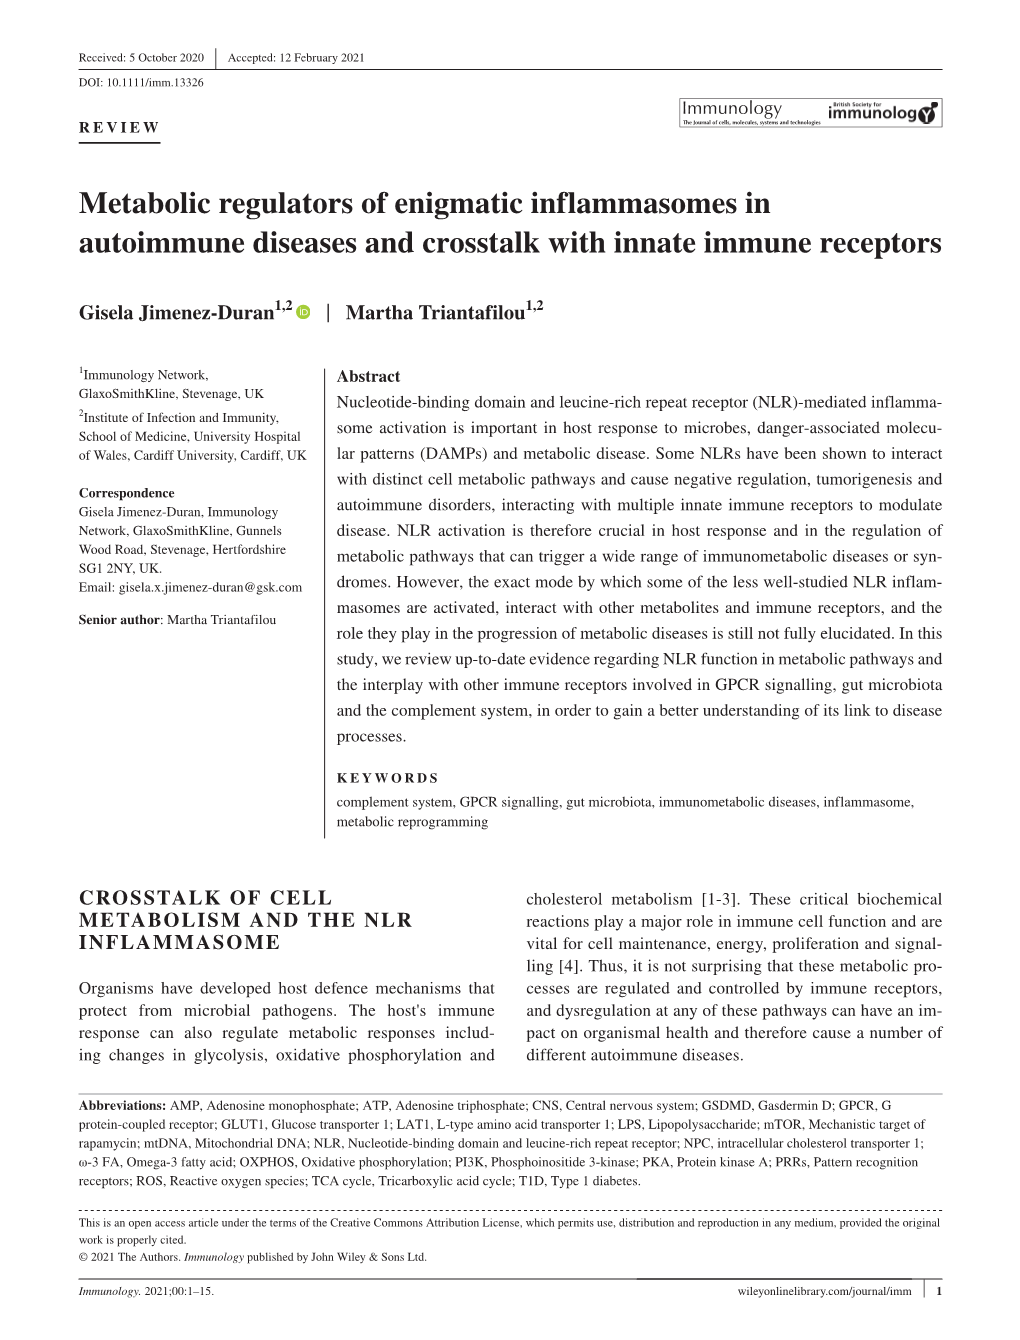 Metabolic Regulators of Enigmatic Inflammasomes in Autoimmune Diseases and Crosstalk with Innate Immune Receptors